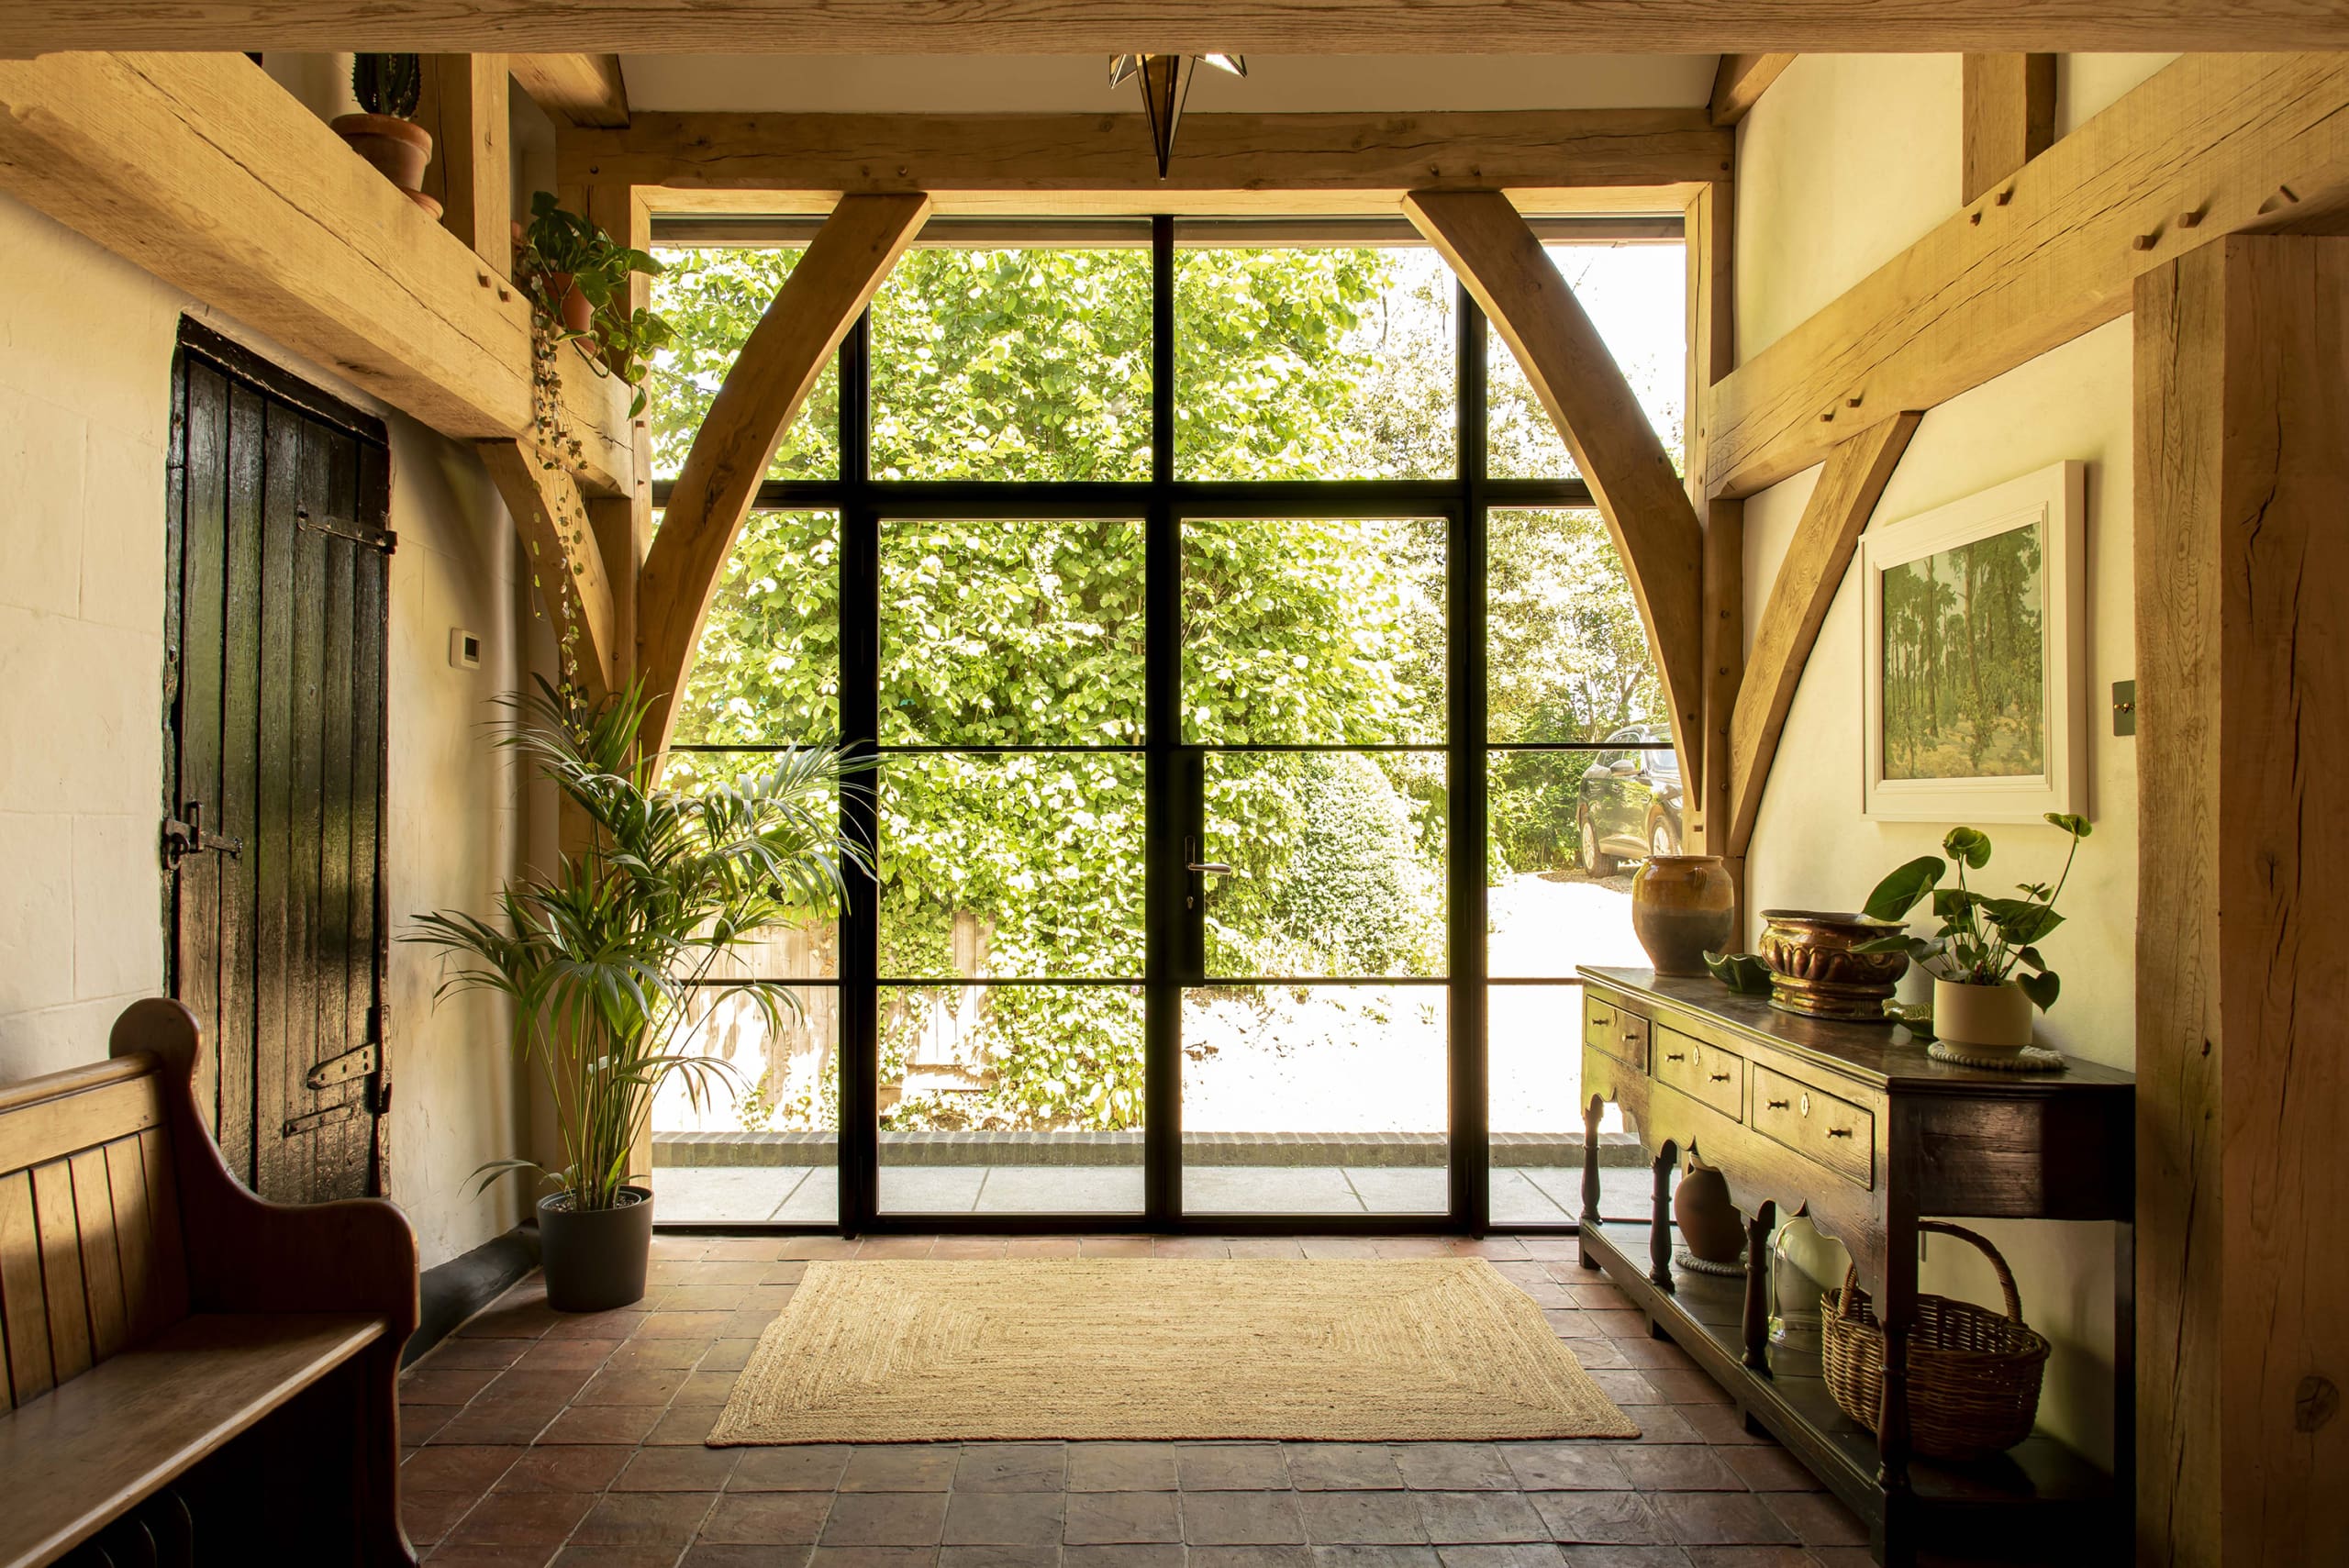 Hallway to substantial property with timber beams and aluminium door.